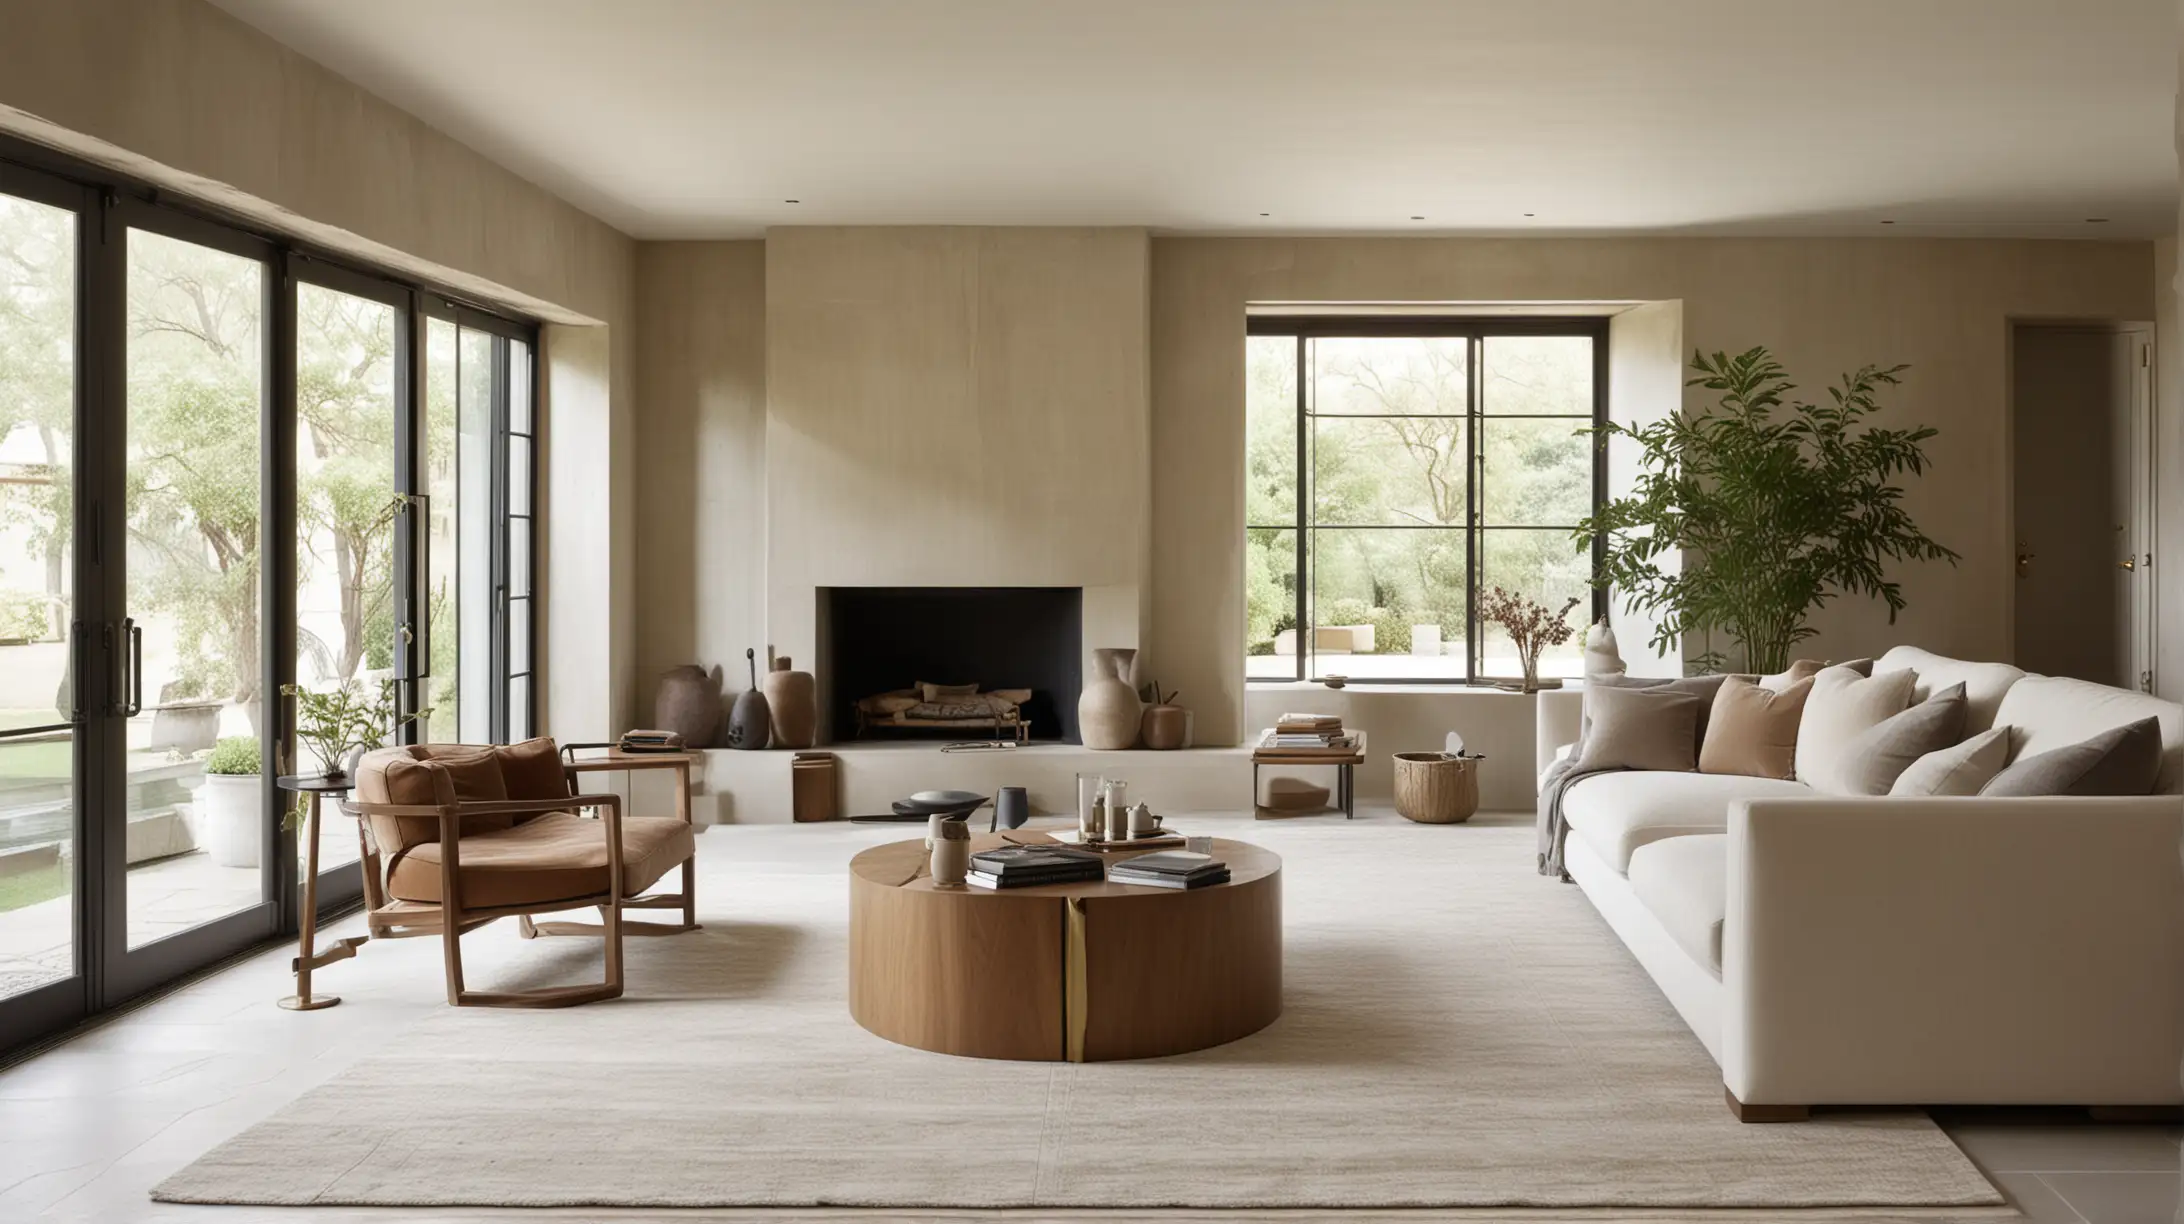 a large lounge room inspired by a modern organic moody European farmhouse; limestone floor, walnut wood, limewash painted walls, brass; wool area rug

